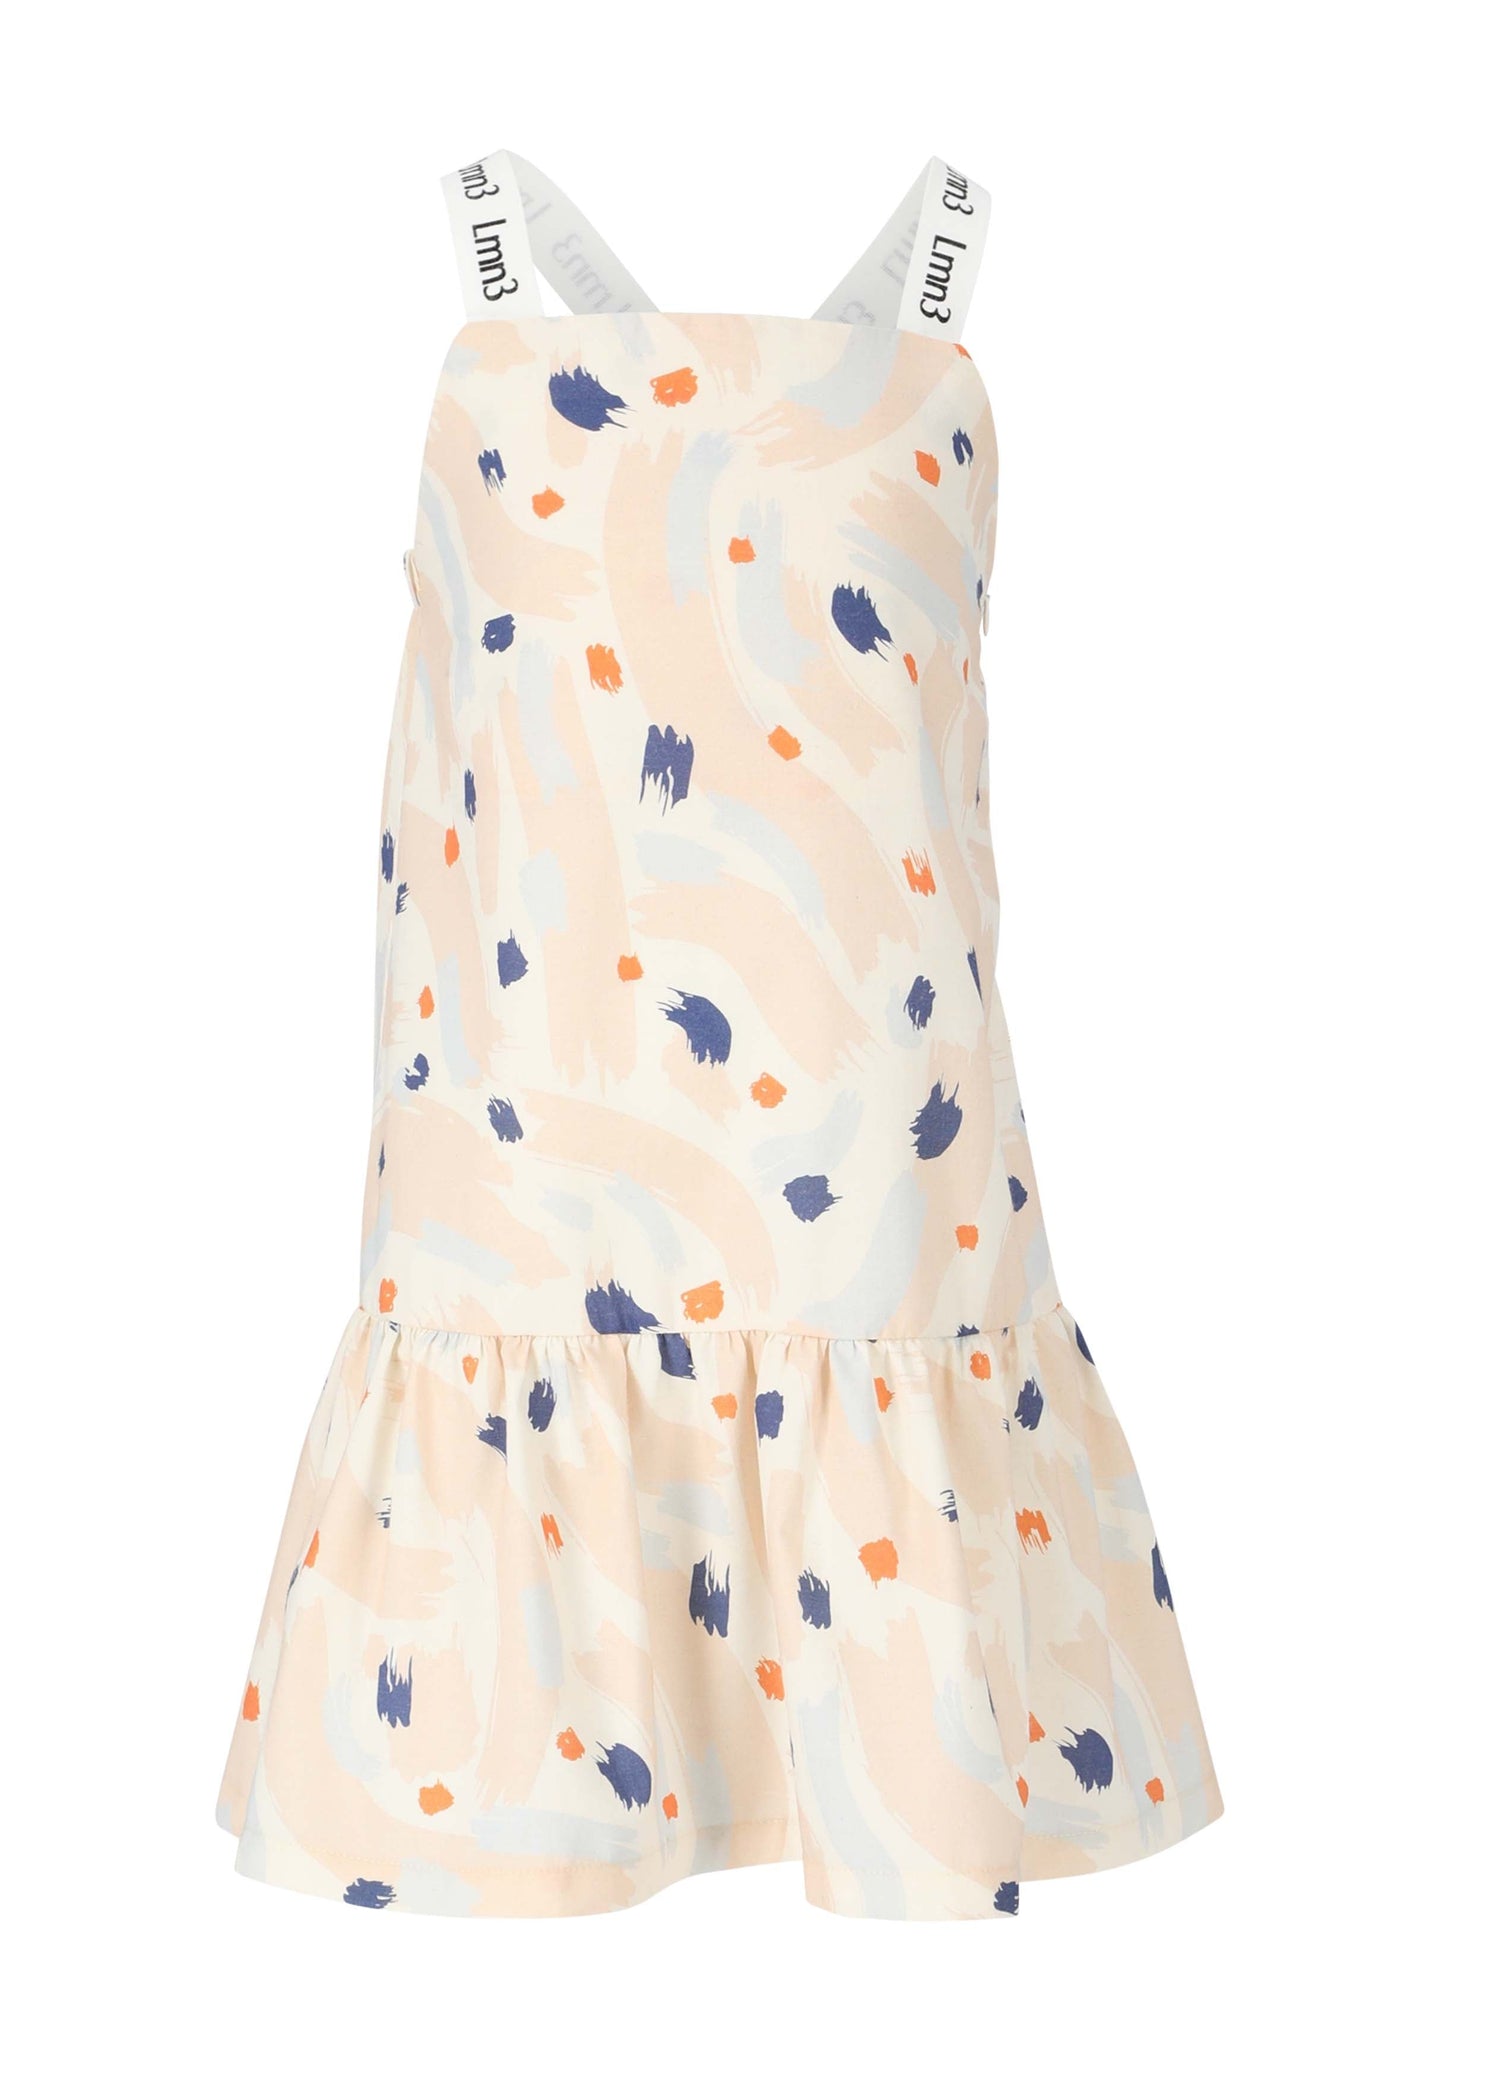 Dress No. 19 - Art Print Dresses LMN3 